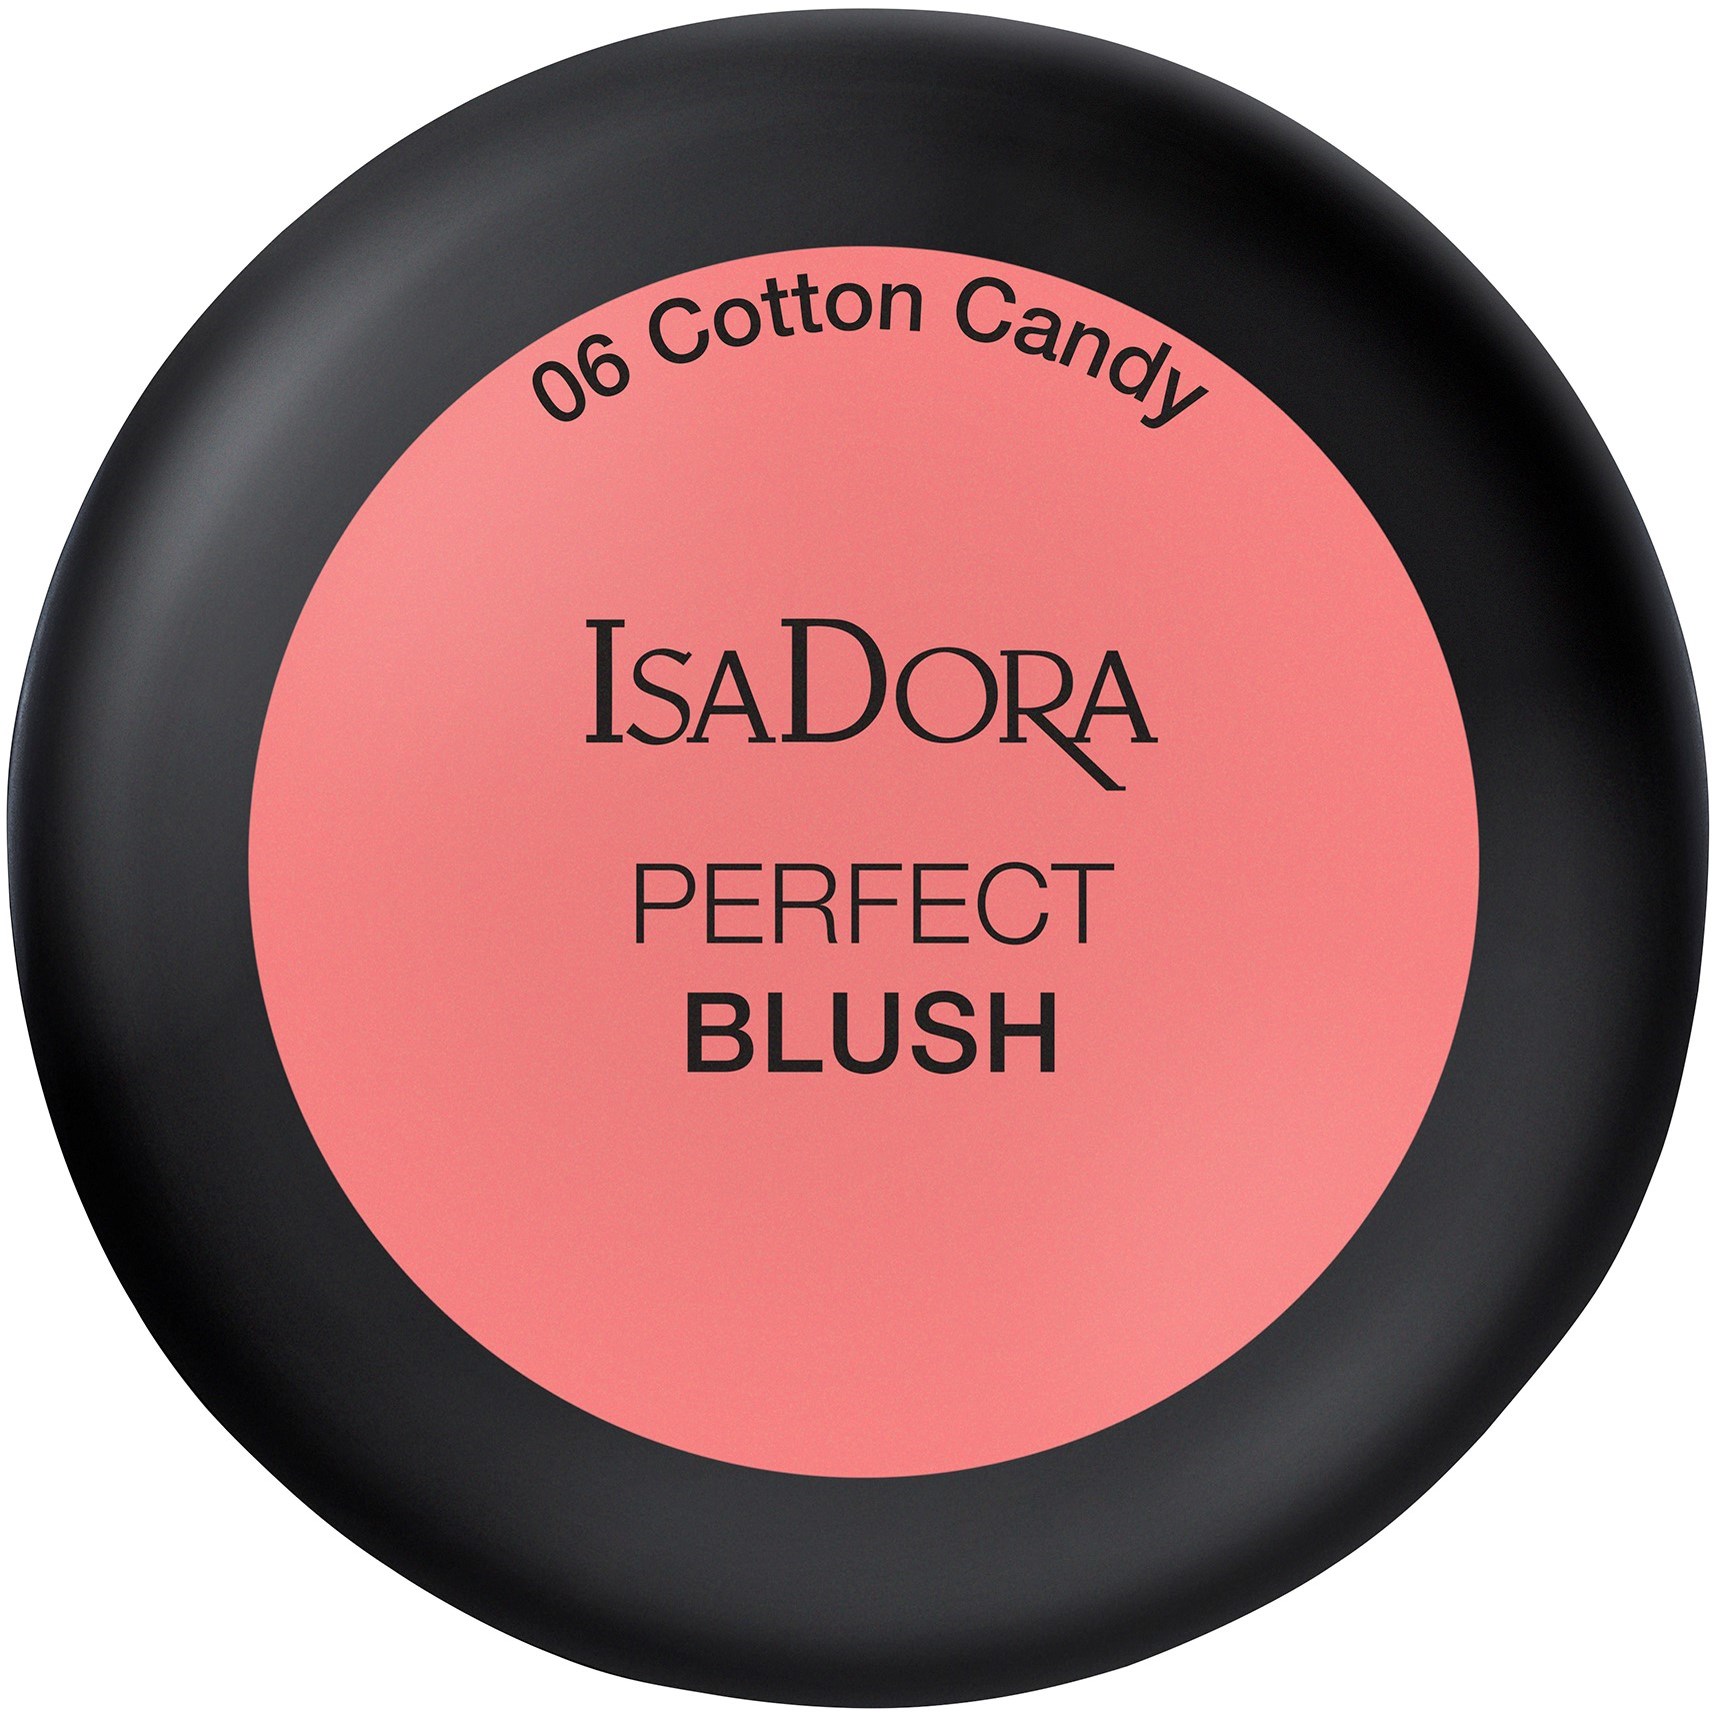 IsaDora Perfect Blush 6 Cotton Candy